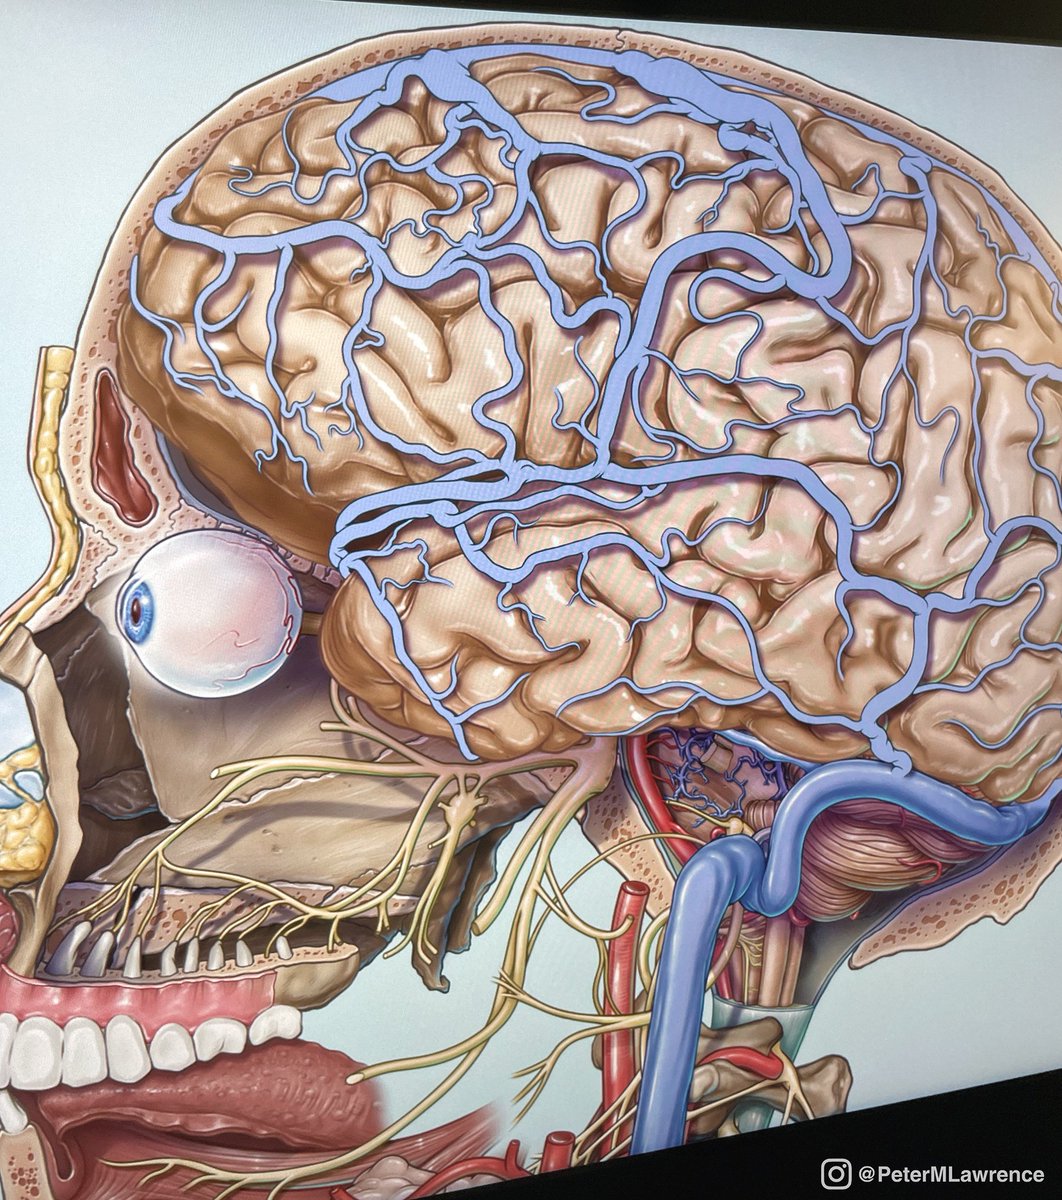 Work in progress #neuroscience #MedicalEducation #neuro #anatomy 🧠 ✍🏻